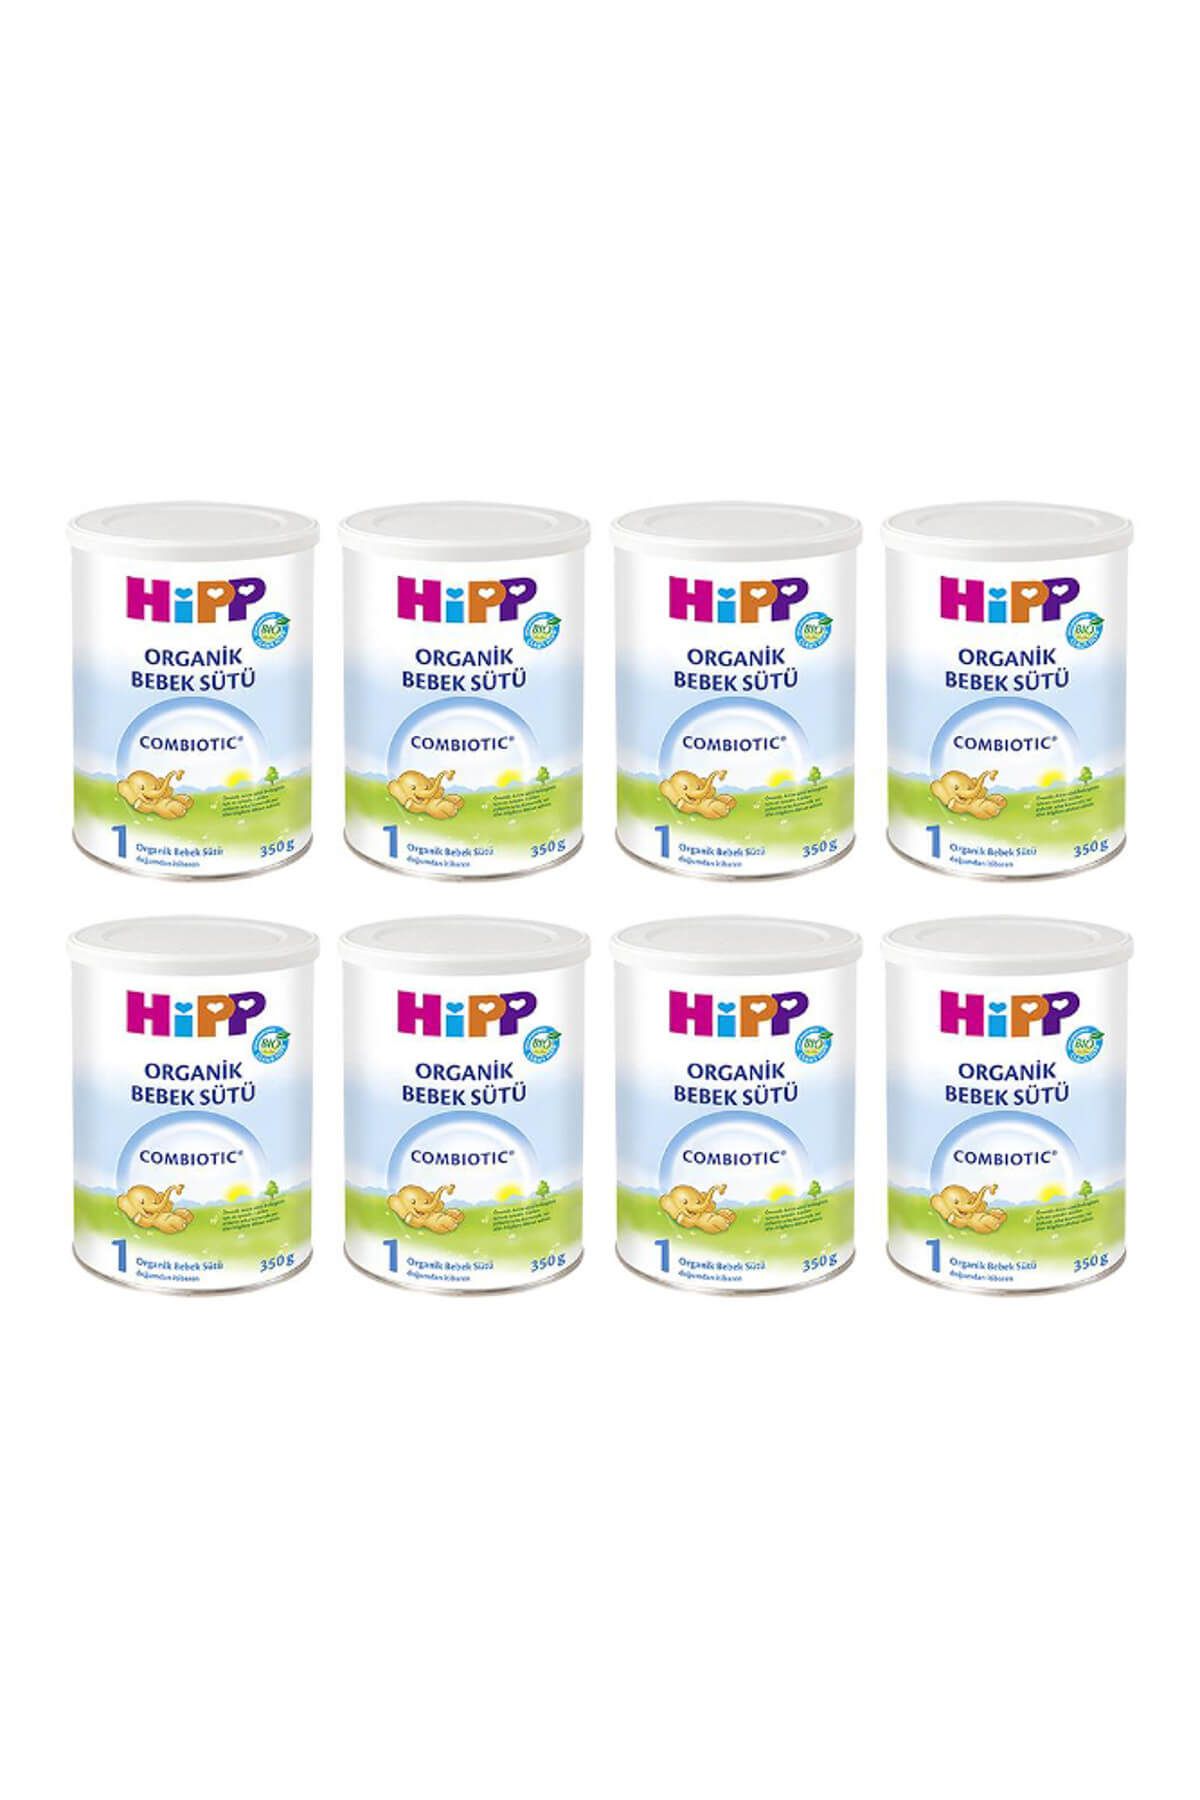 Hipp Organik Combiotic Bebek Sütü 1 Numara 350 gr x 8 Adet